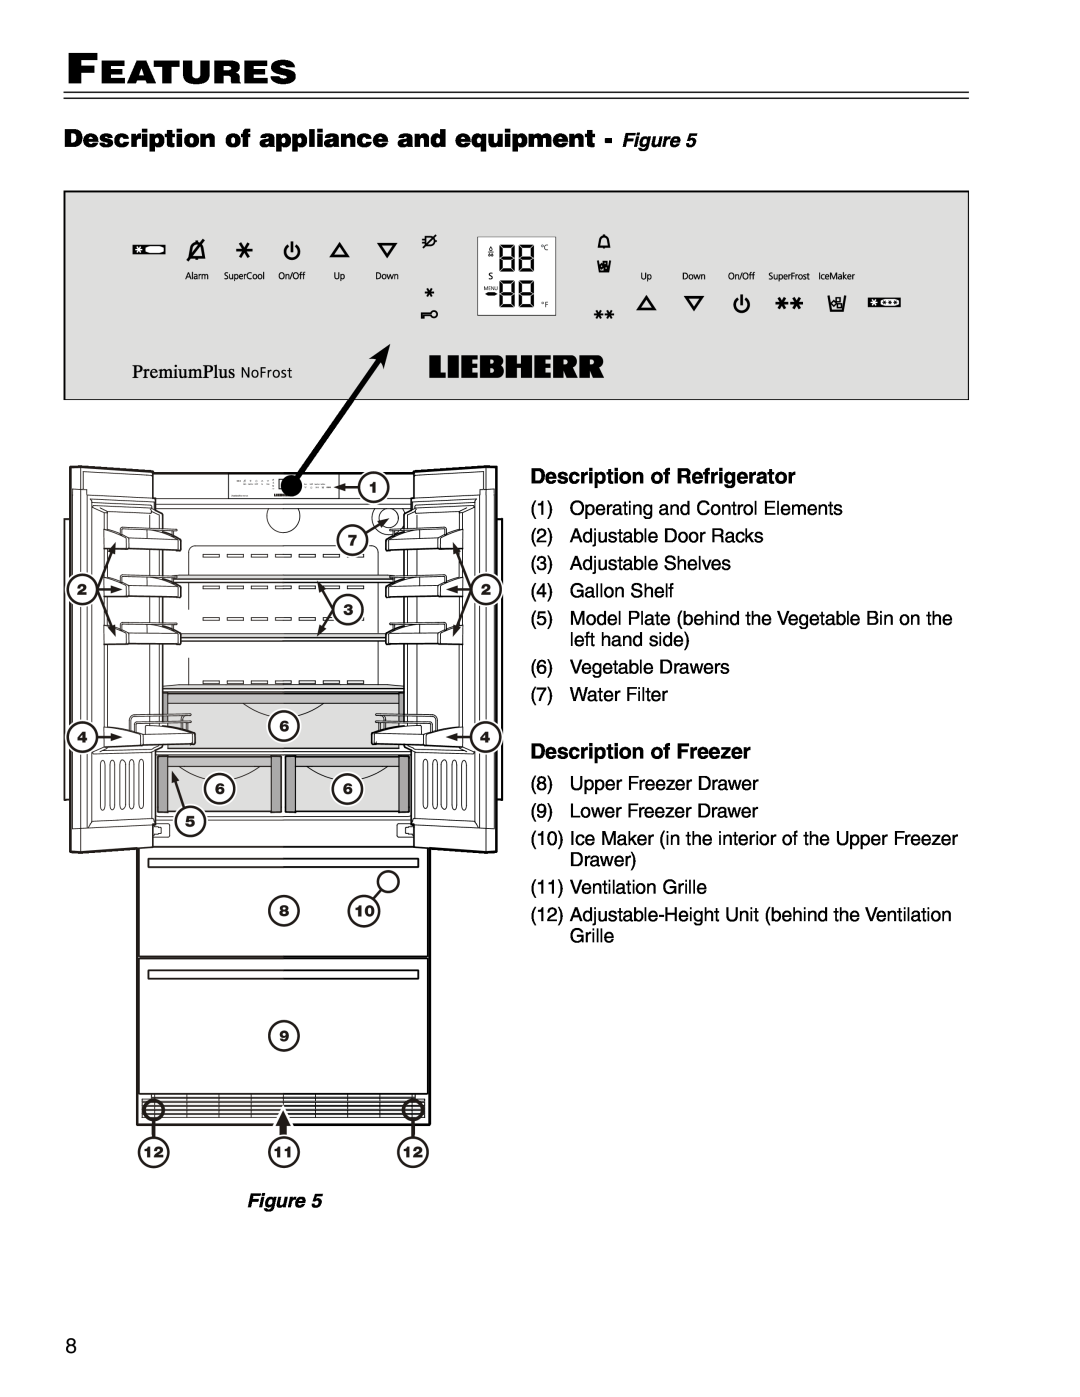 Liebherr CS 7081411-00 manual Features, Description of appliance and equipment - Figure, Description of Refrigerator 